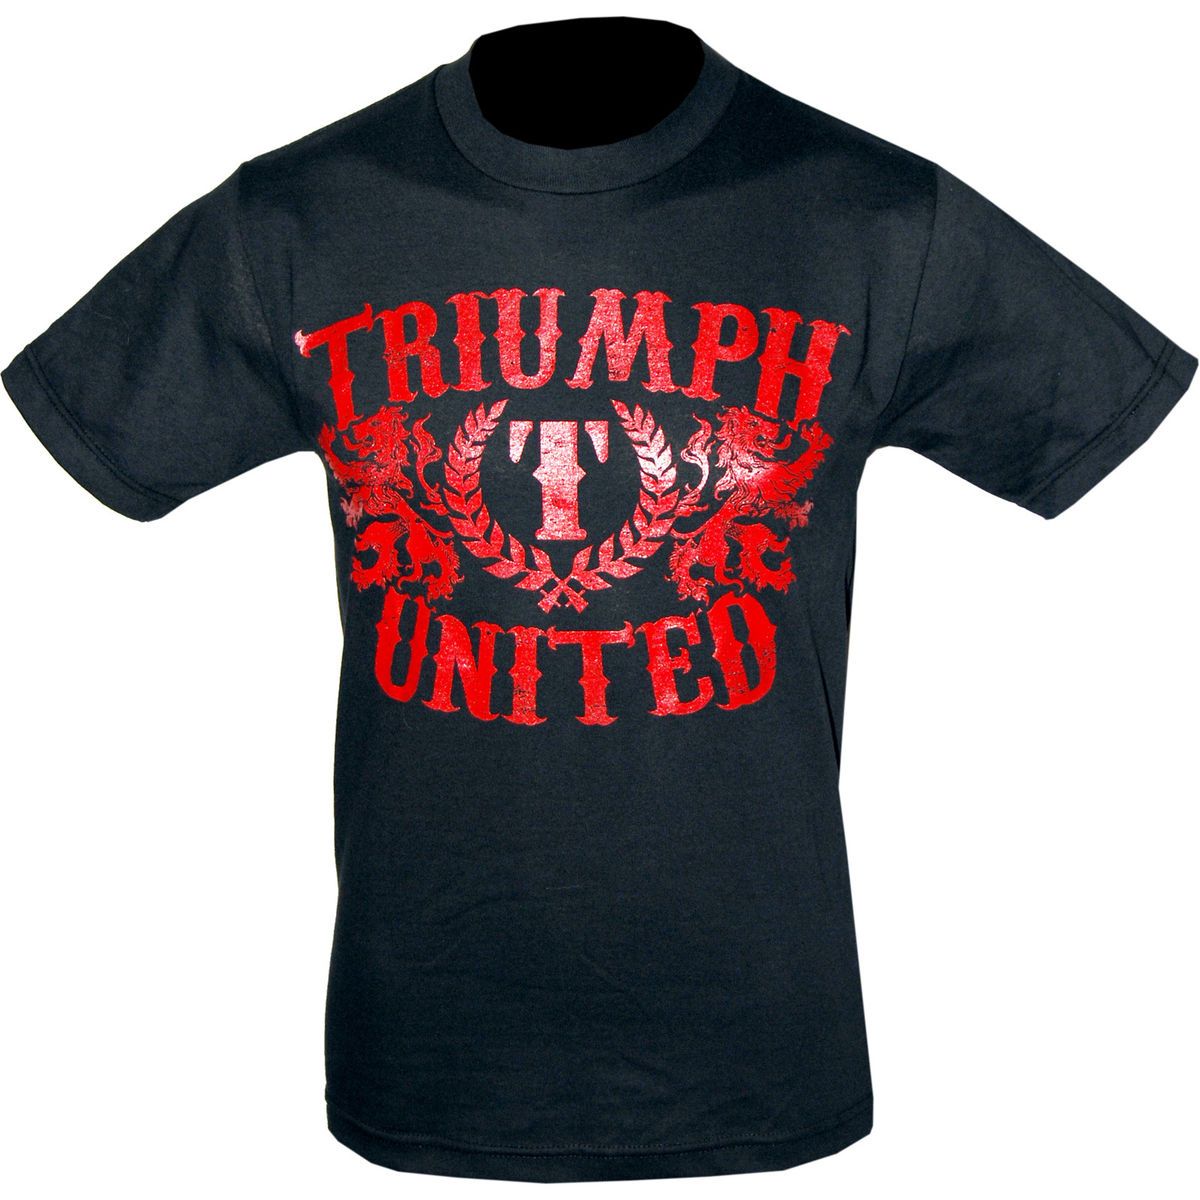 Triumph United UFC Dana White Crest Black T Shirt Tee Size M Medium